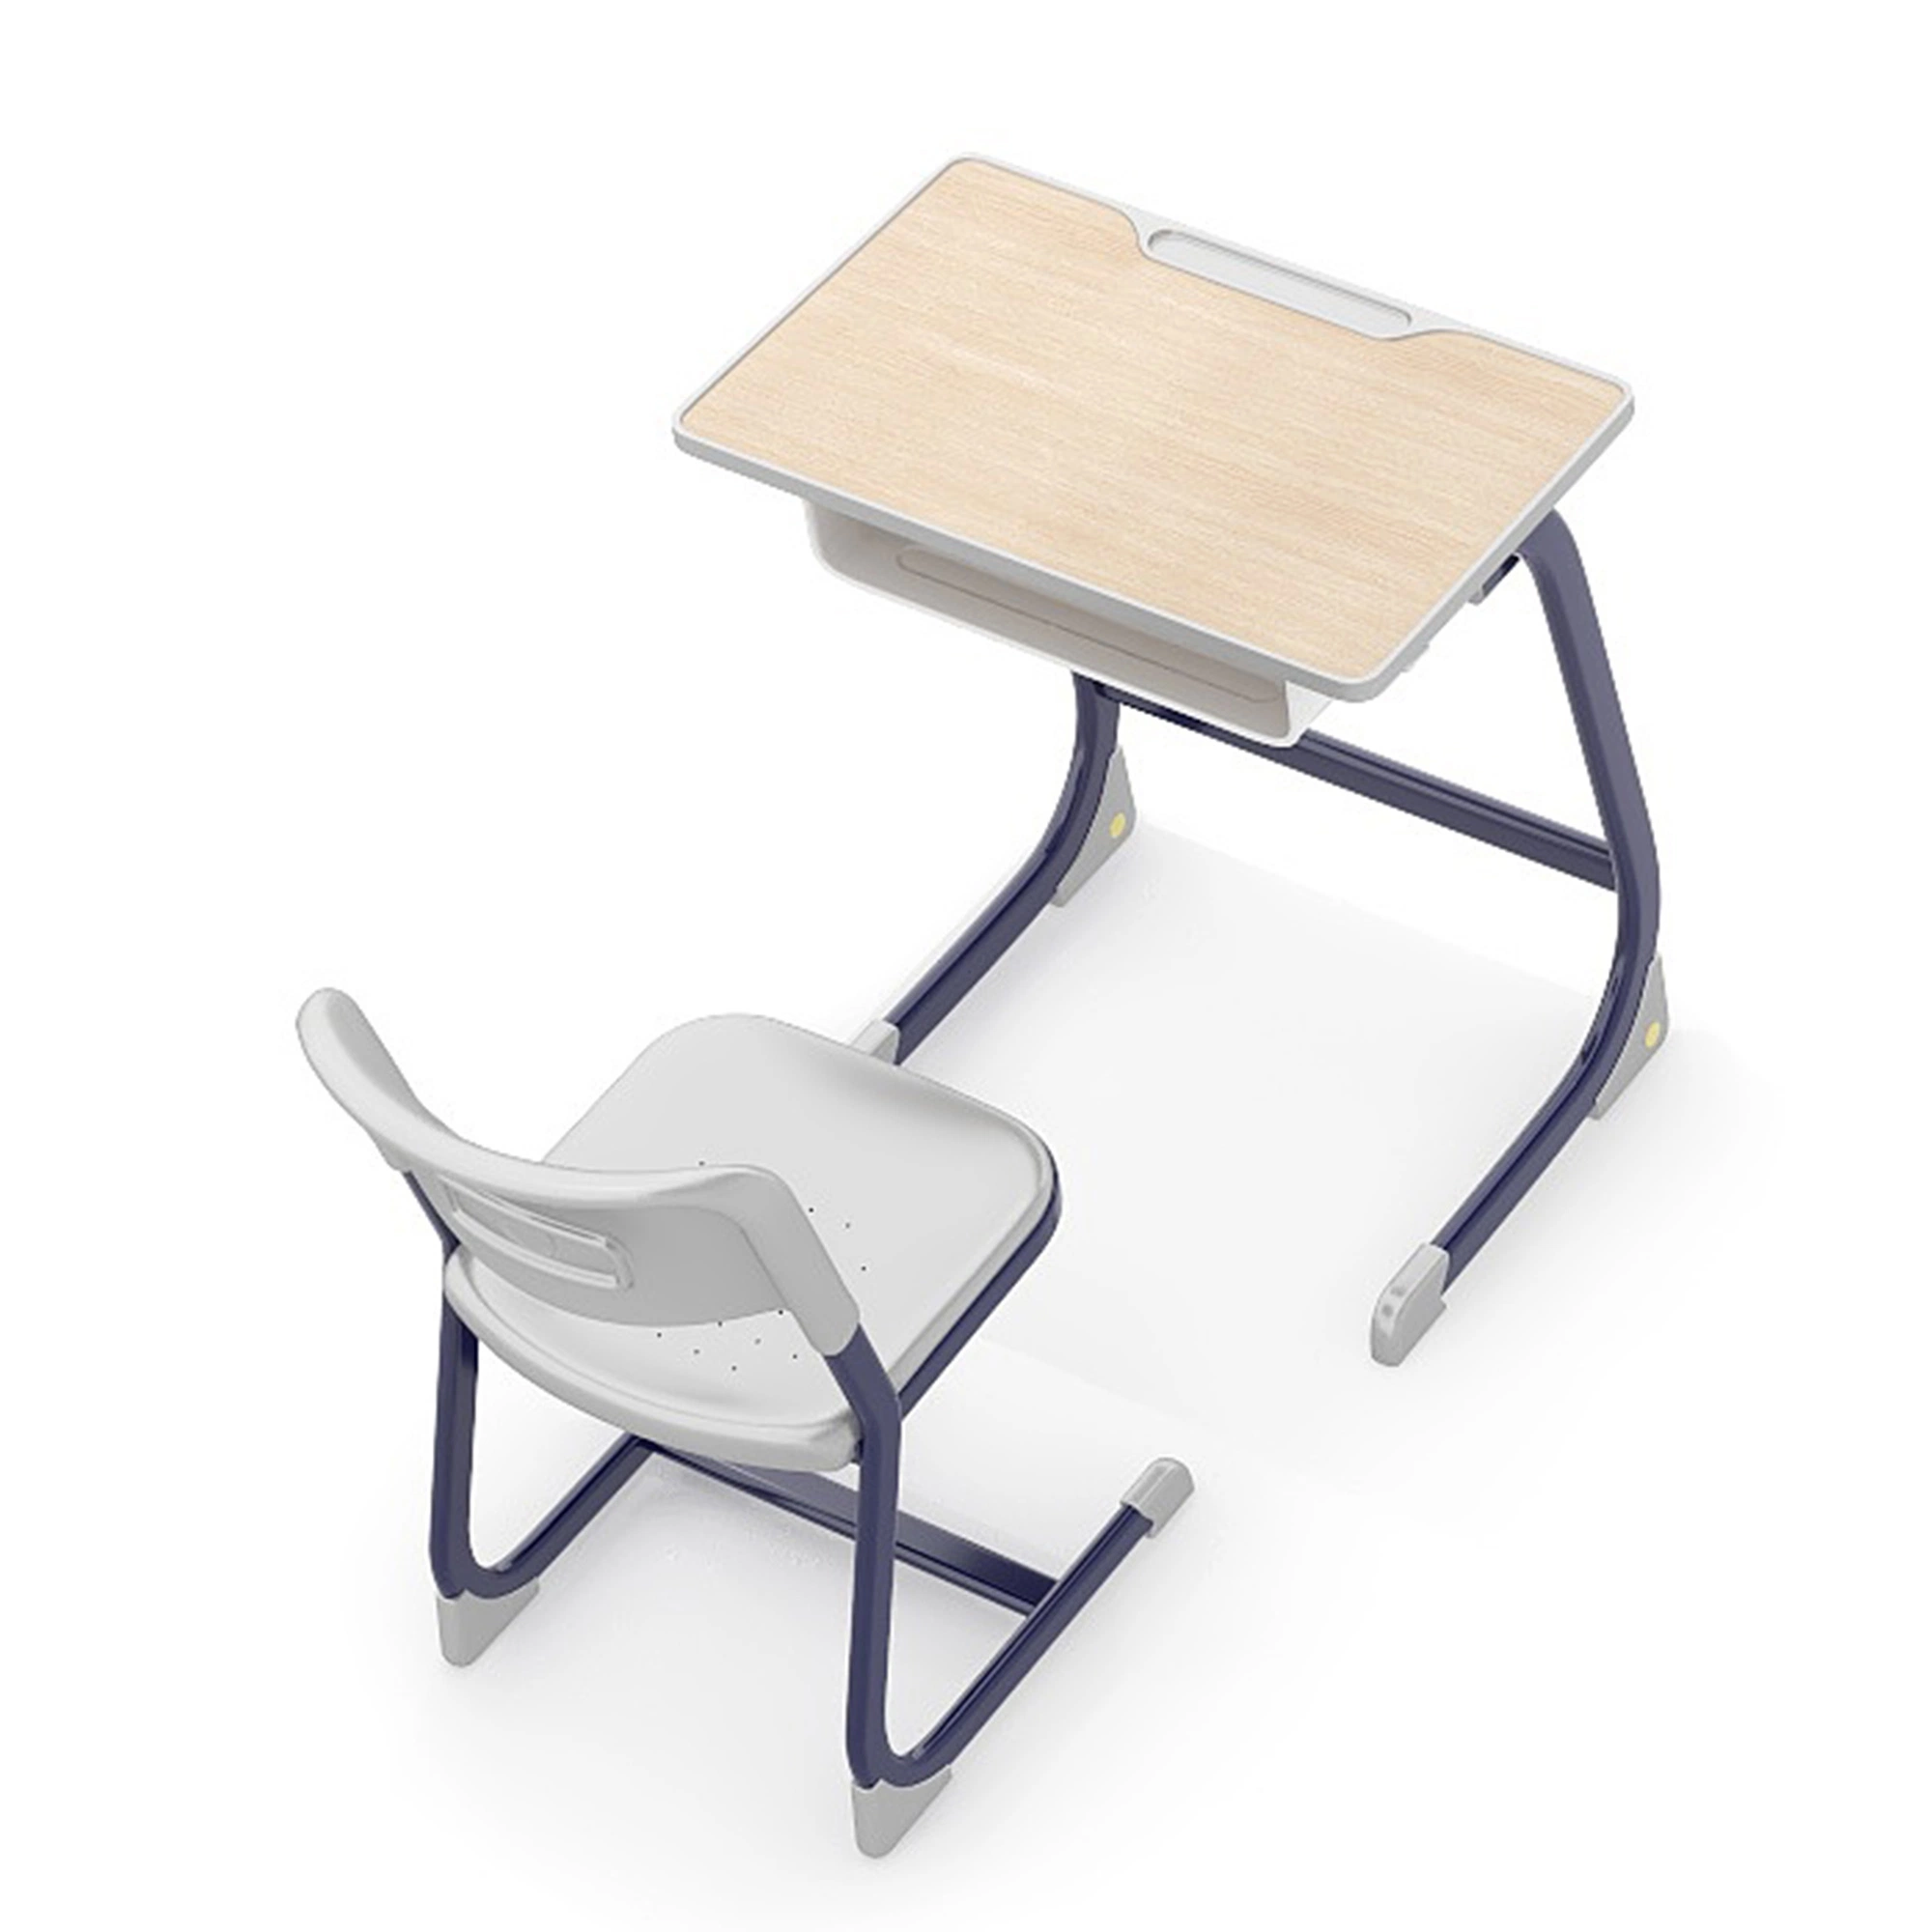 Modern School MDF Table Top Children Classroom Seat University Desk Chair Set